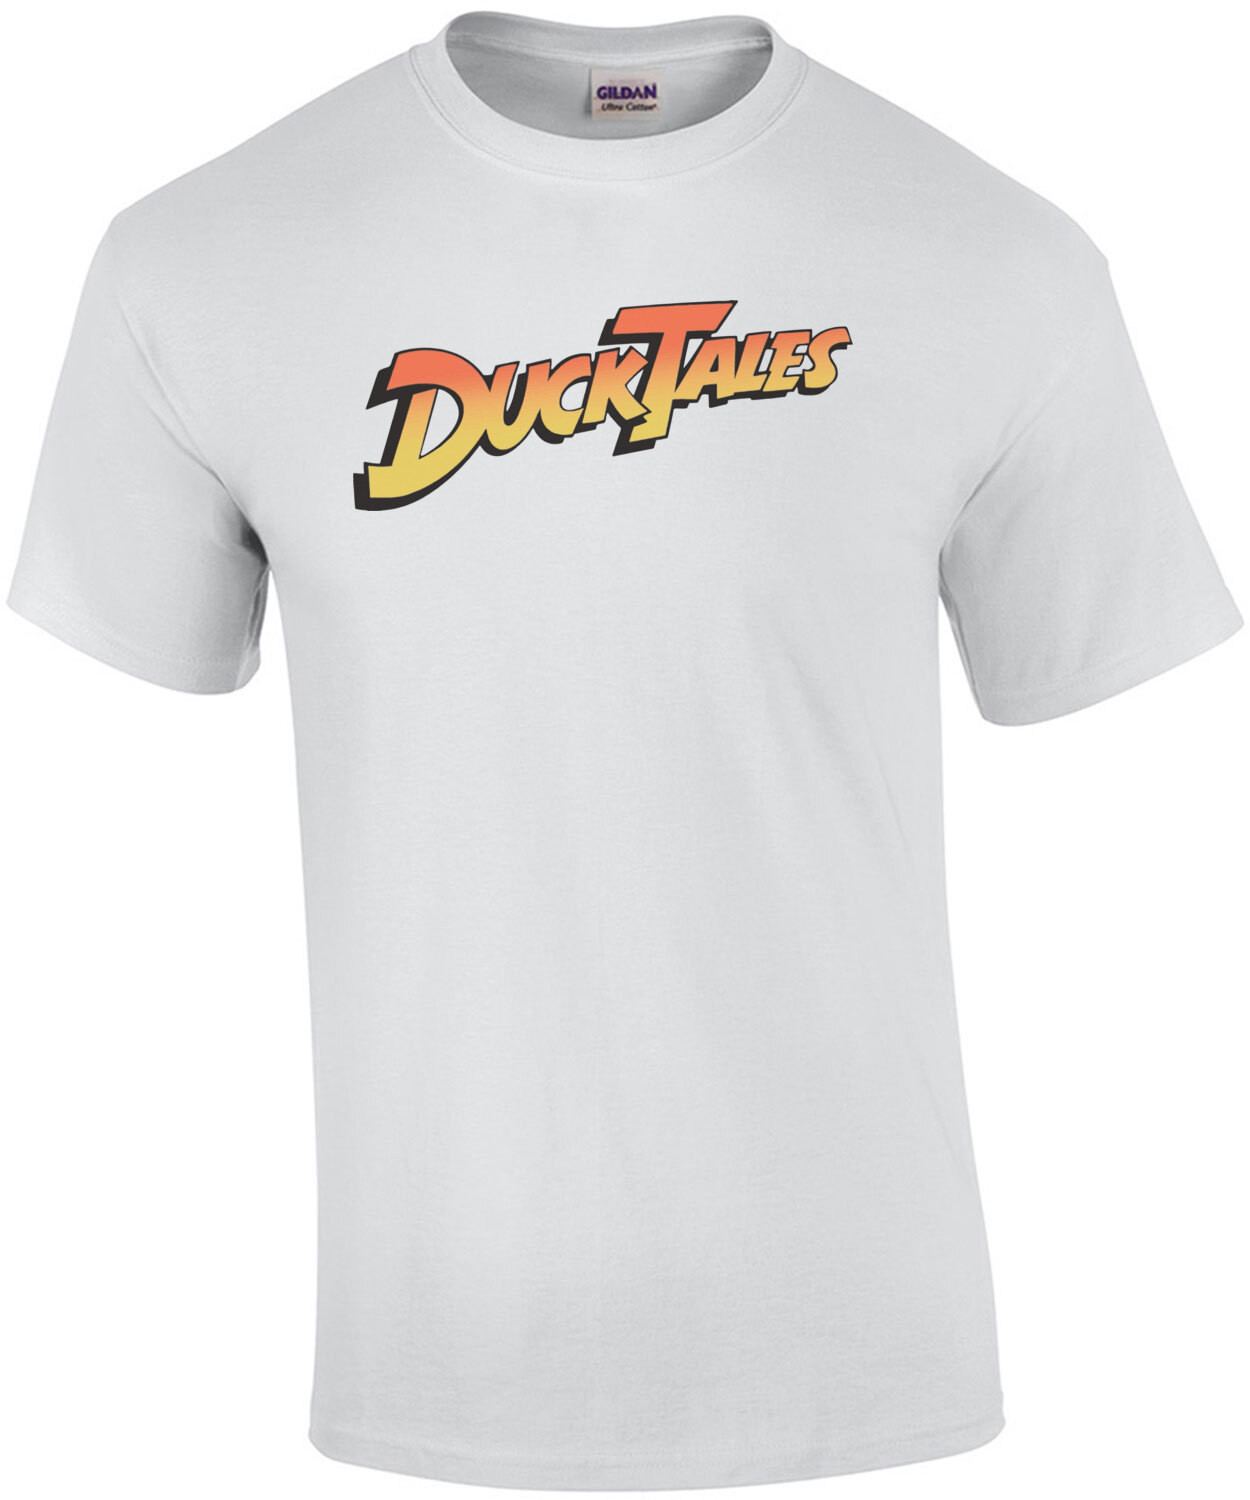 Duck Tales - 80's T-Shirt